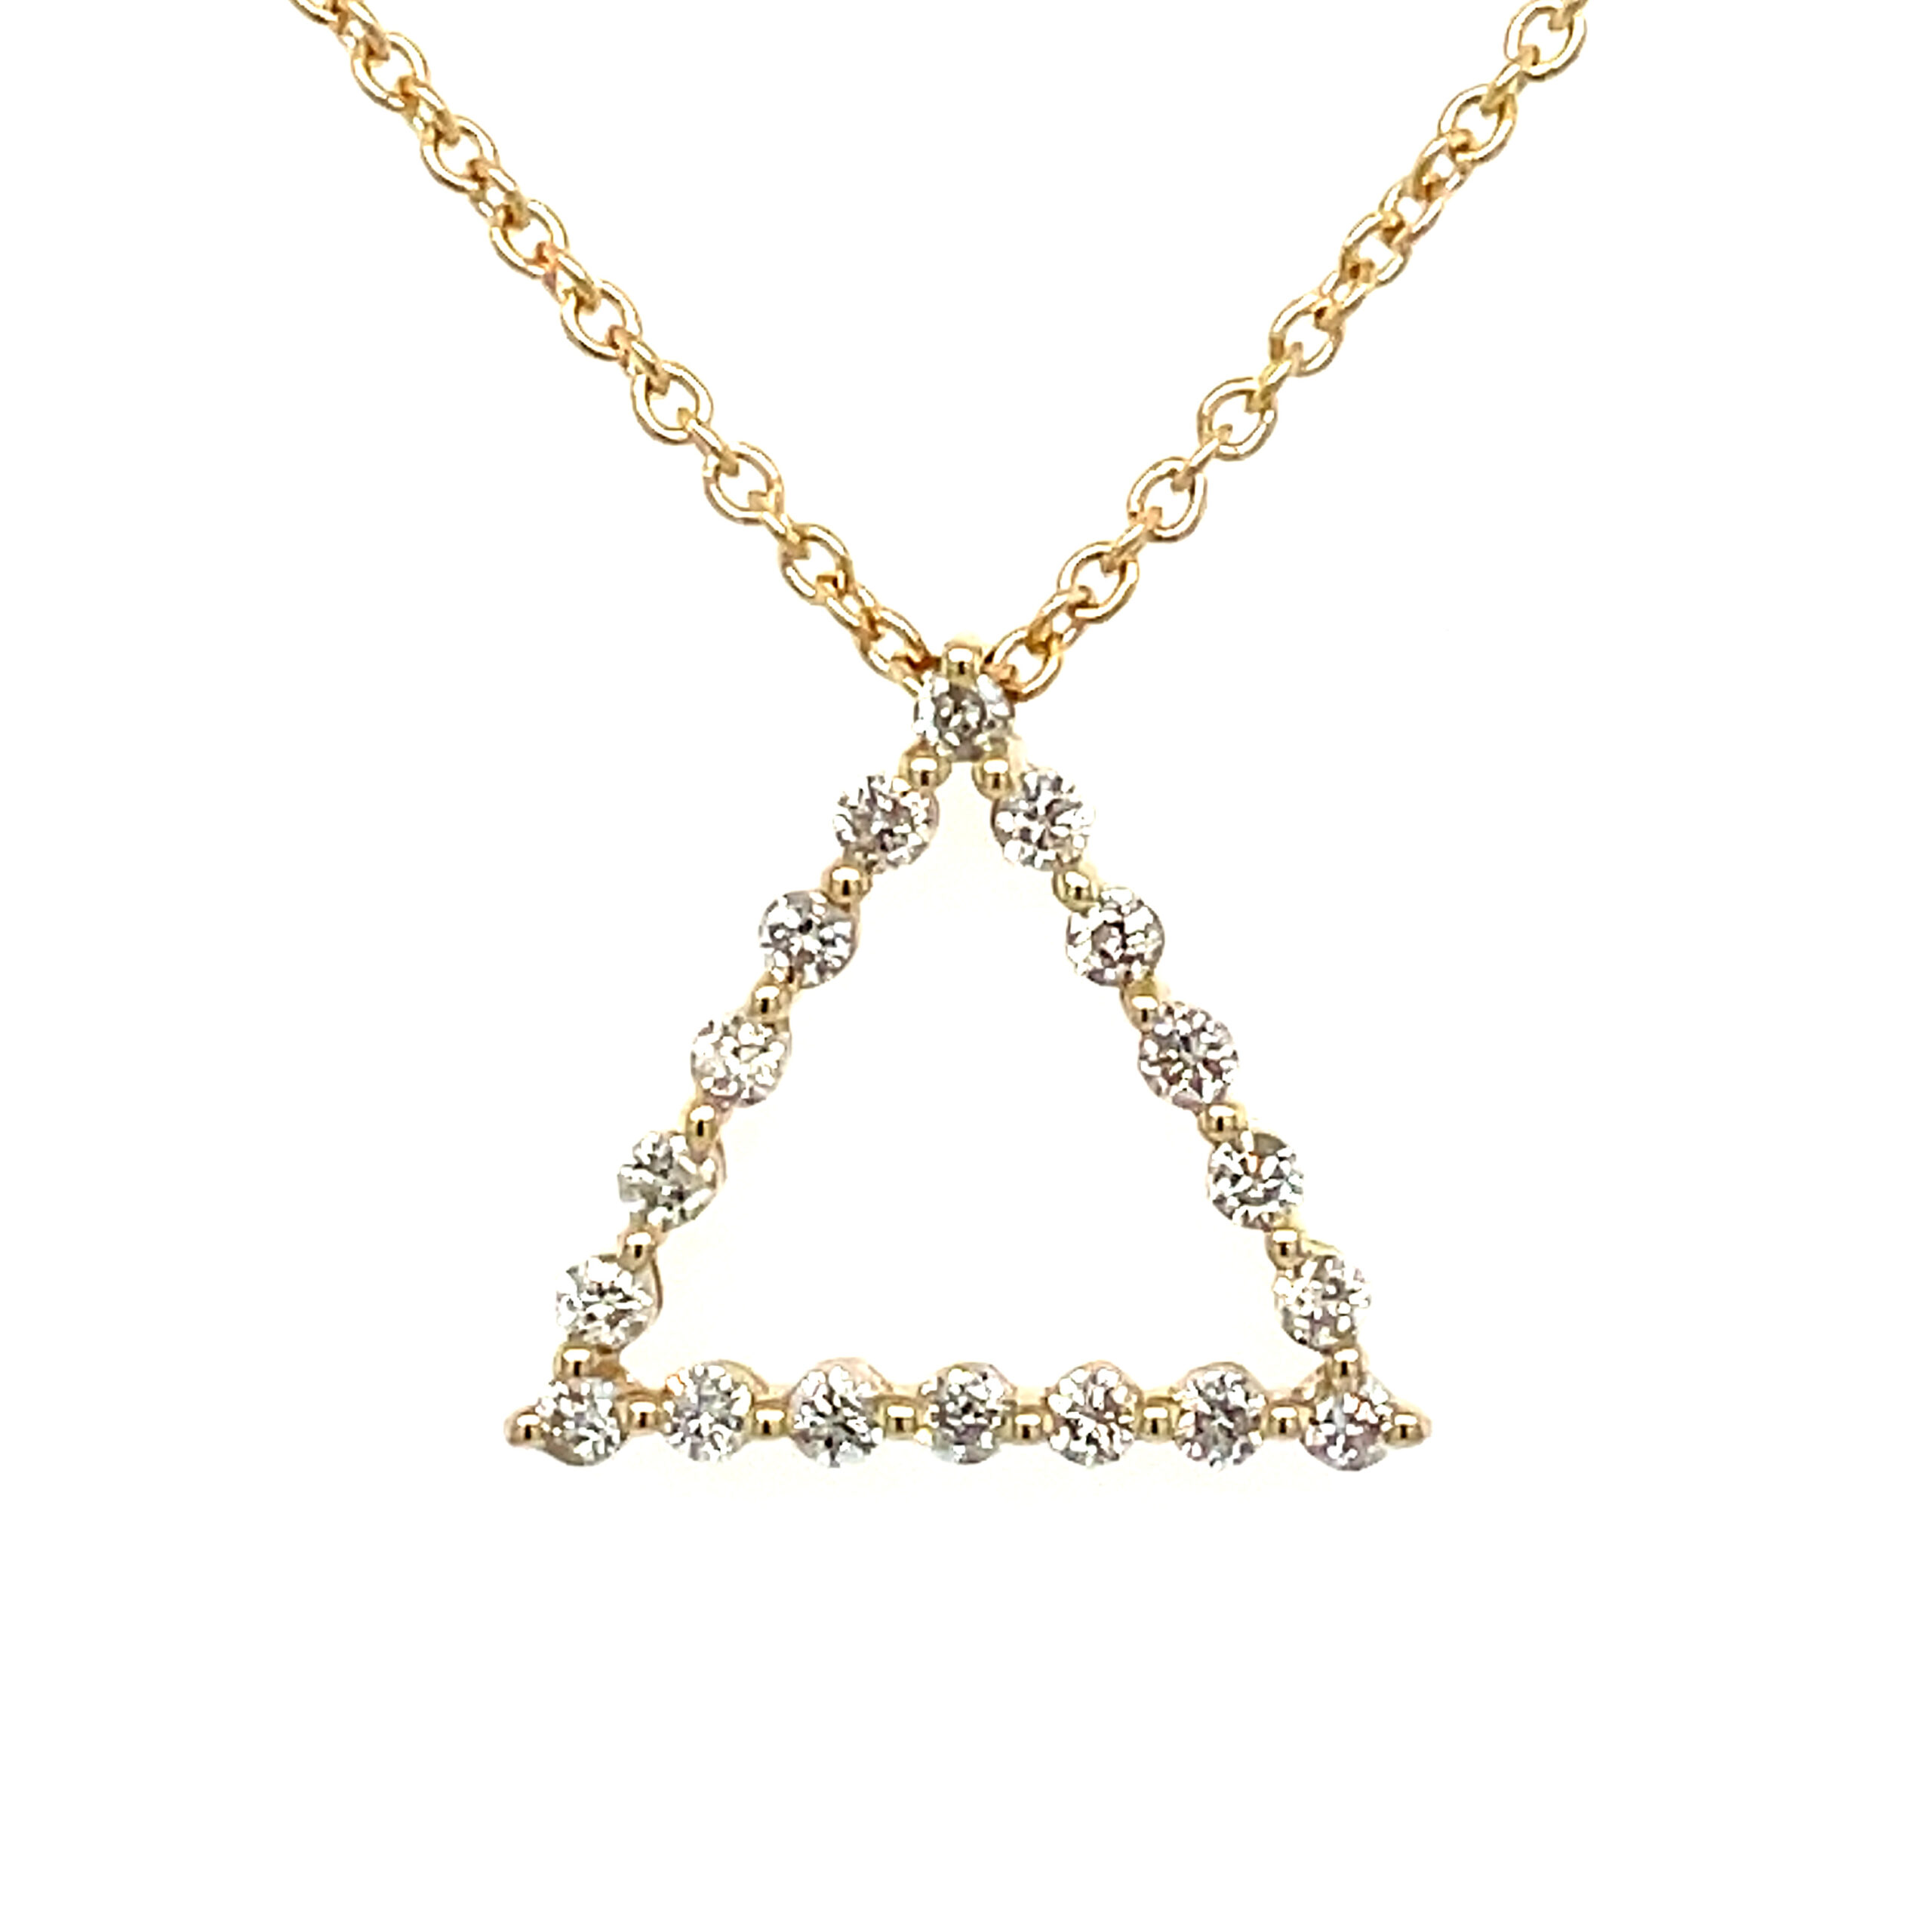 Yellow Gold Diamond Triangle Necklace